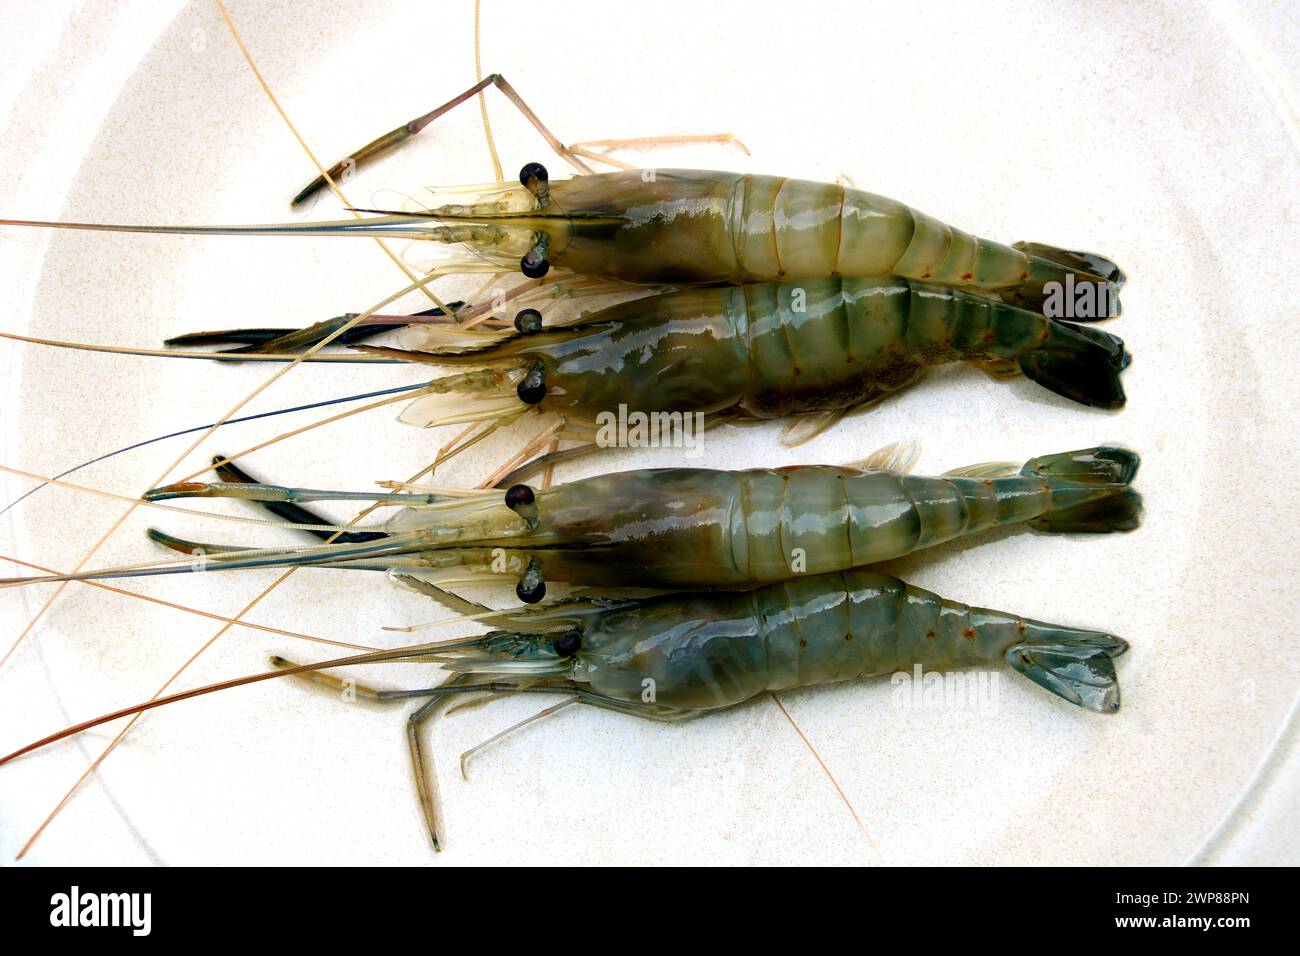 Newly caught freshwater prawns on a white plate in Sarawak Borneo Malaysia Stock Photo